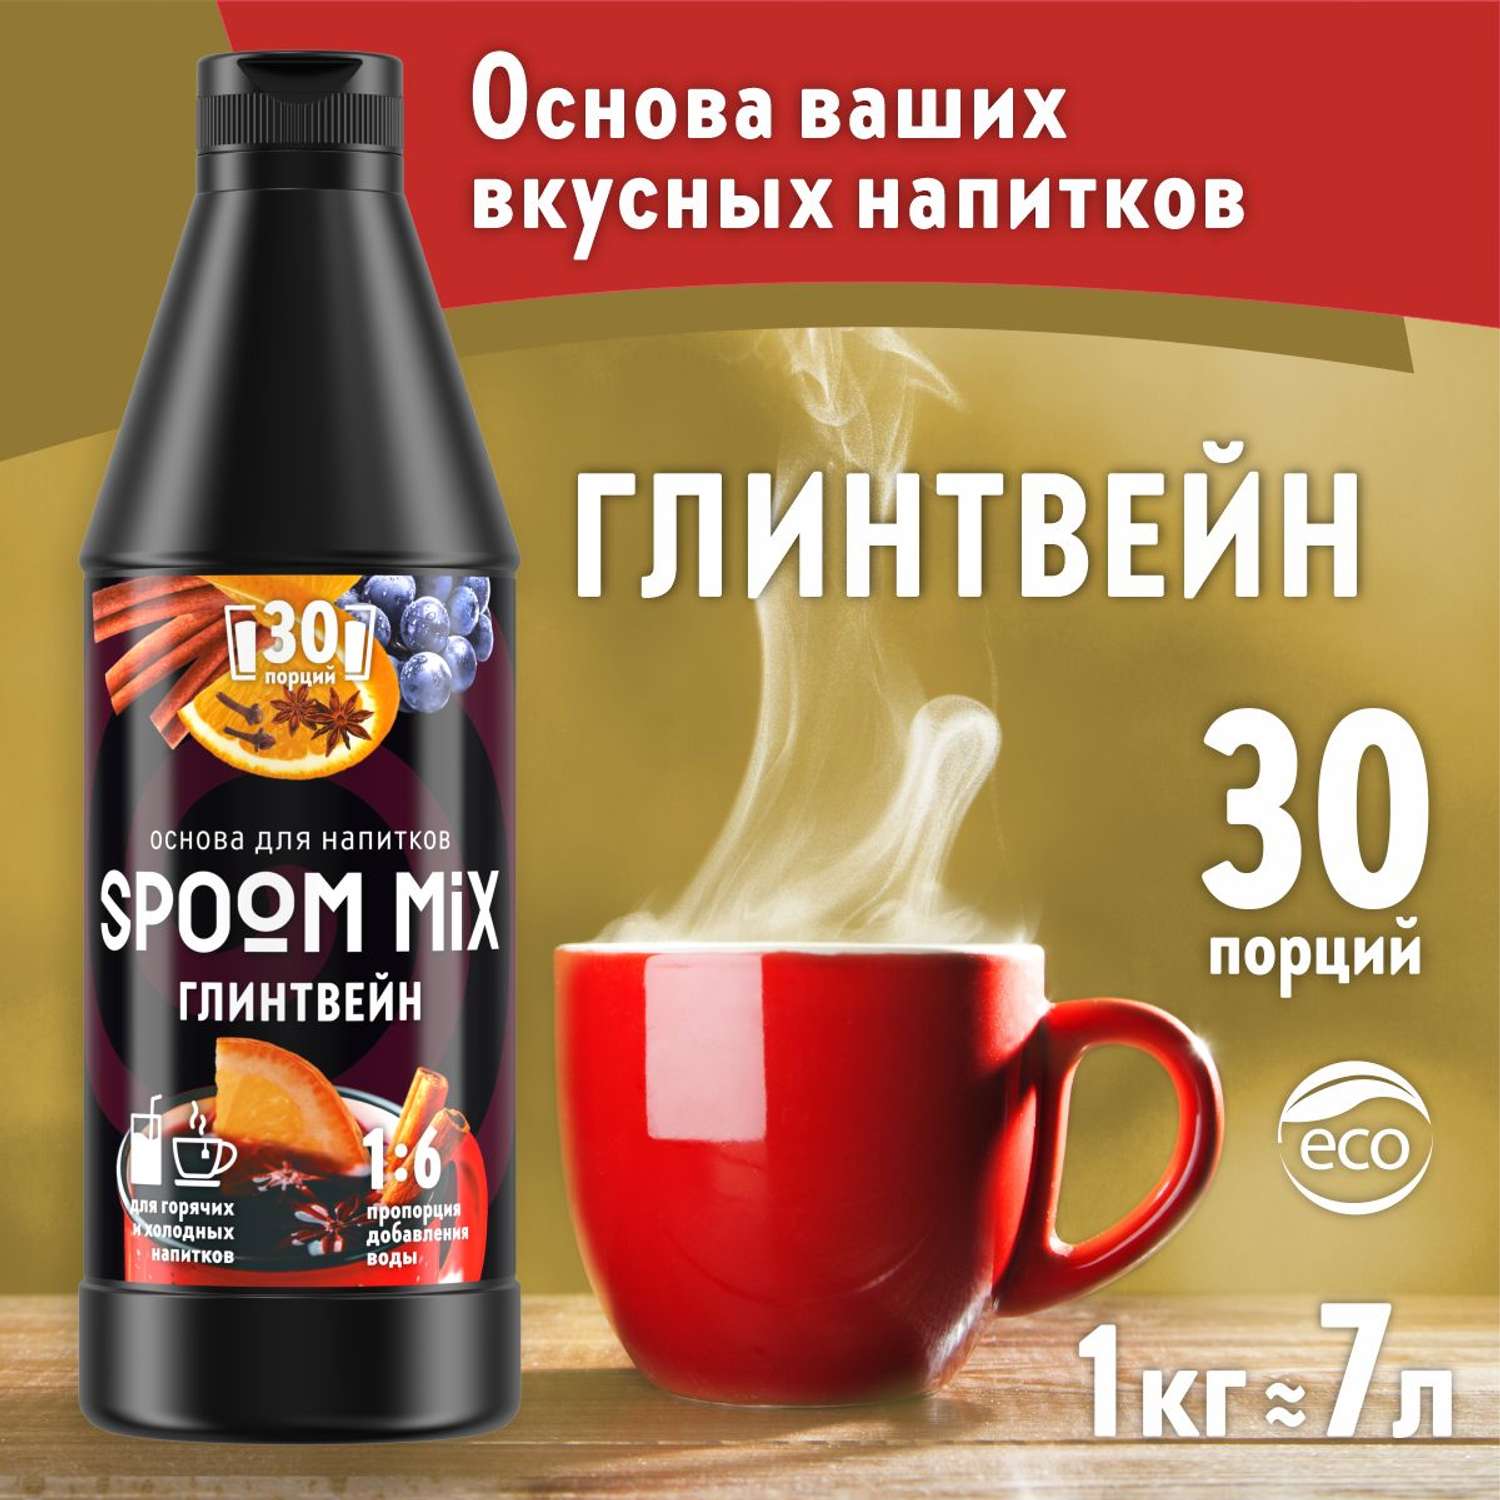 Основа для напитков SPOOM MIX Глинтвейн 1 кг - фото 1